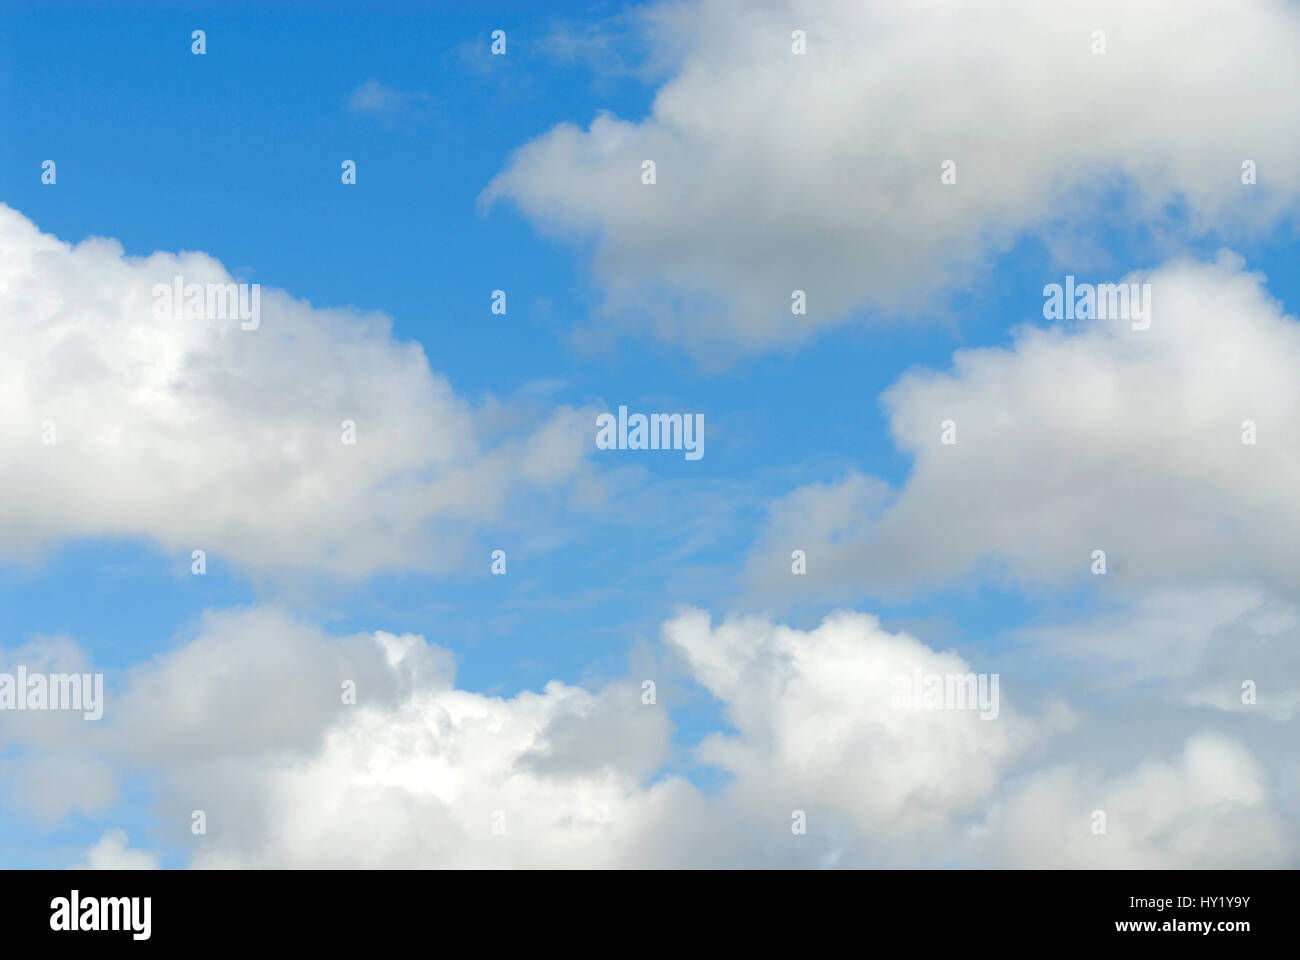 Questo stock foto mostra una perfetta blu cielo parzialmente coperto con cumulus nubi. L'immagine è stata presa su una mattina di sole. Foto Stock